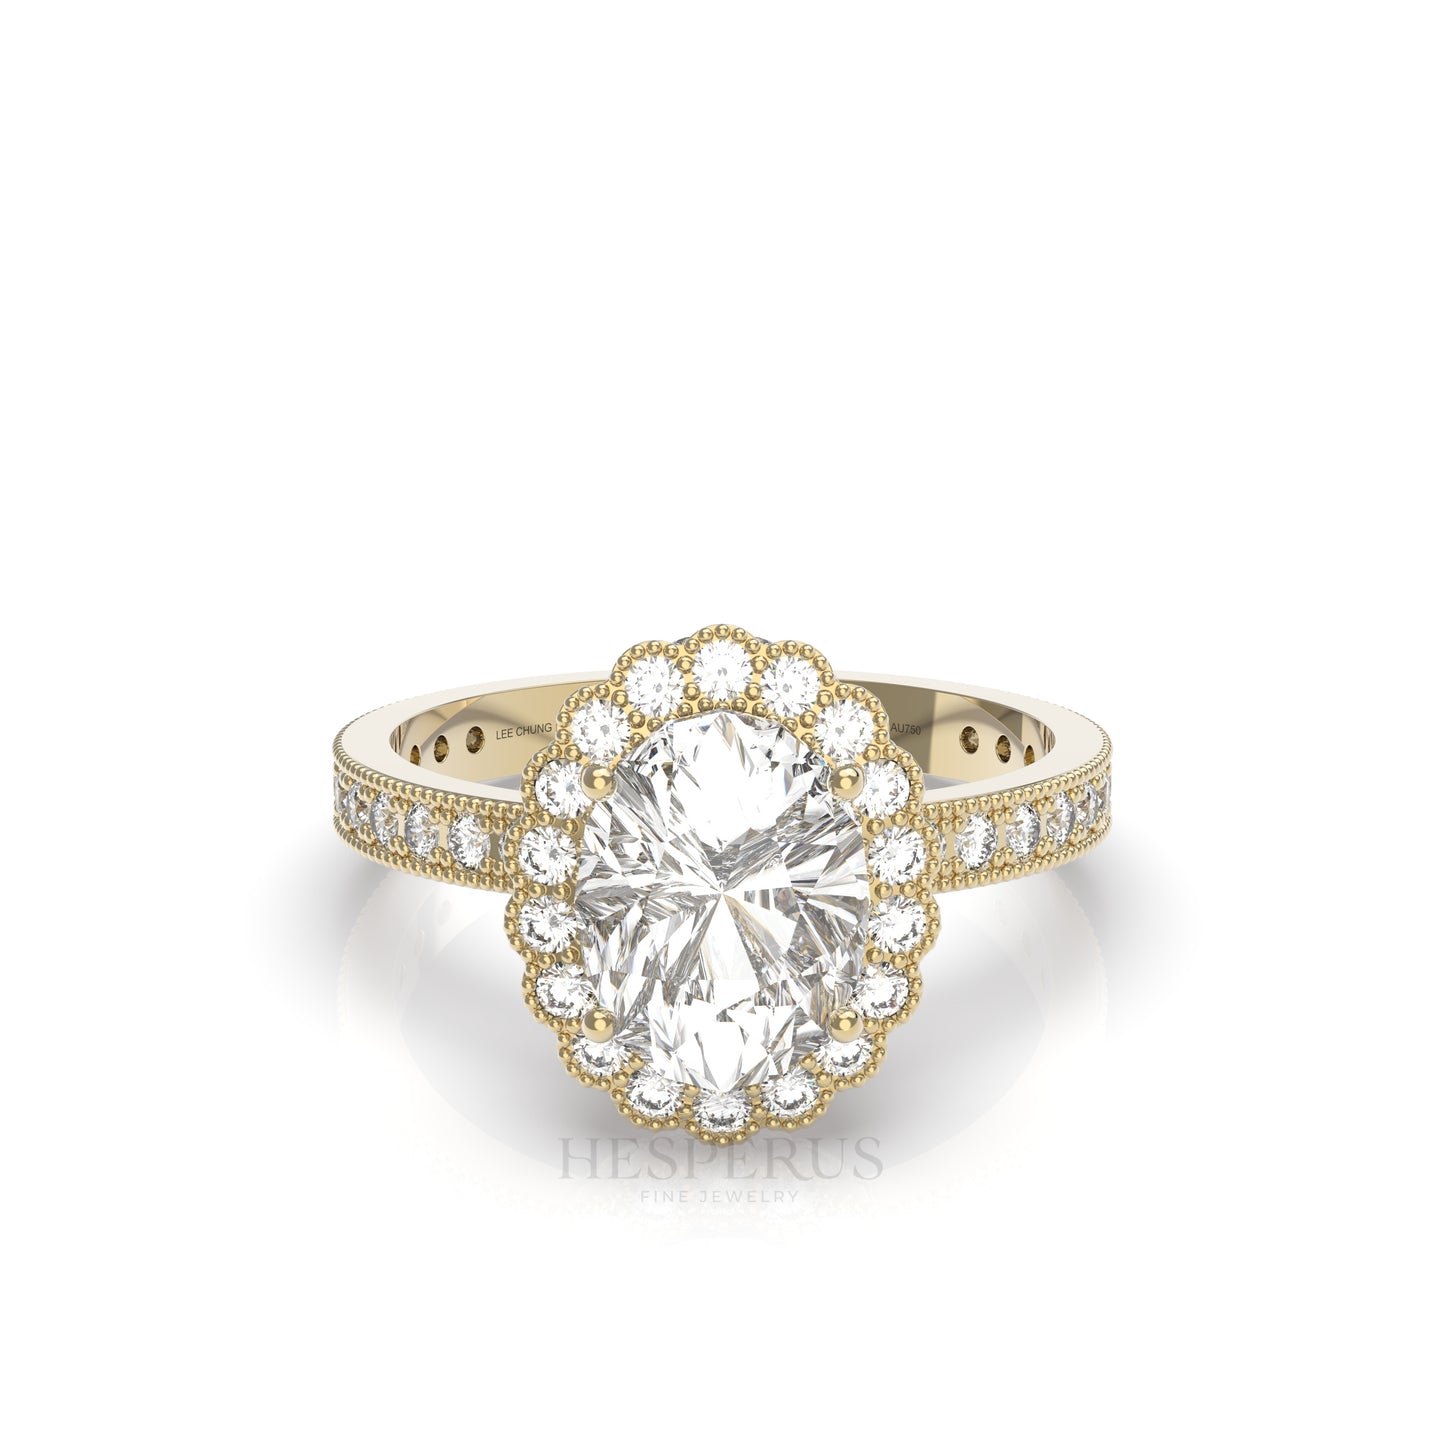 Dahlia Ring-Hesperus Fine Jewelry